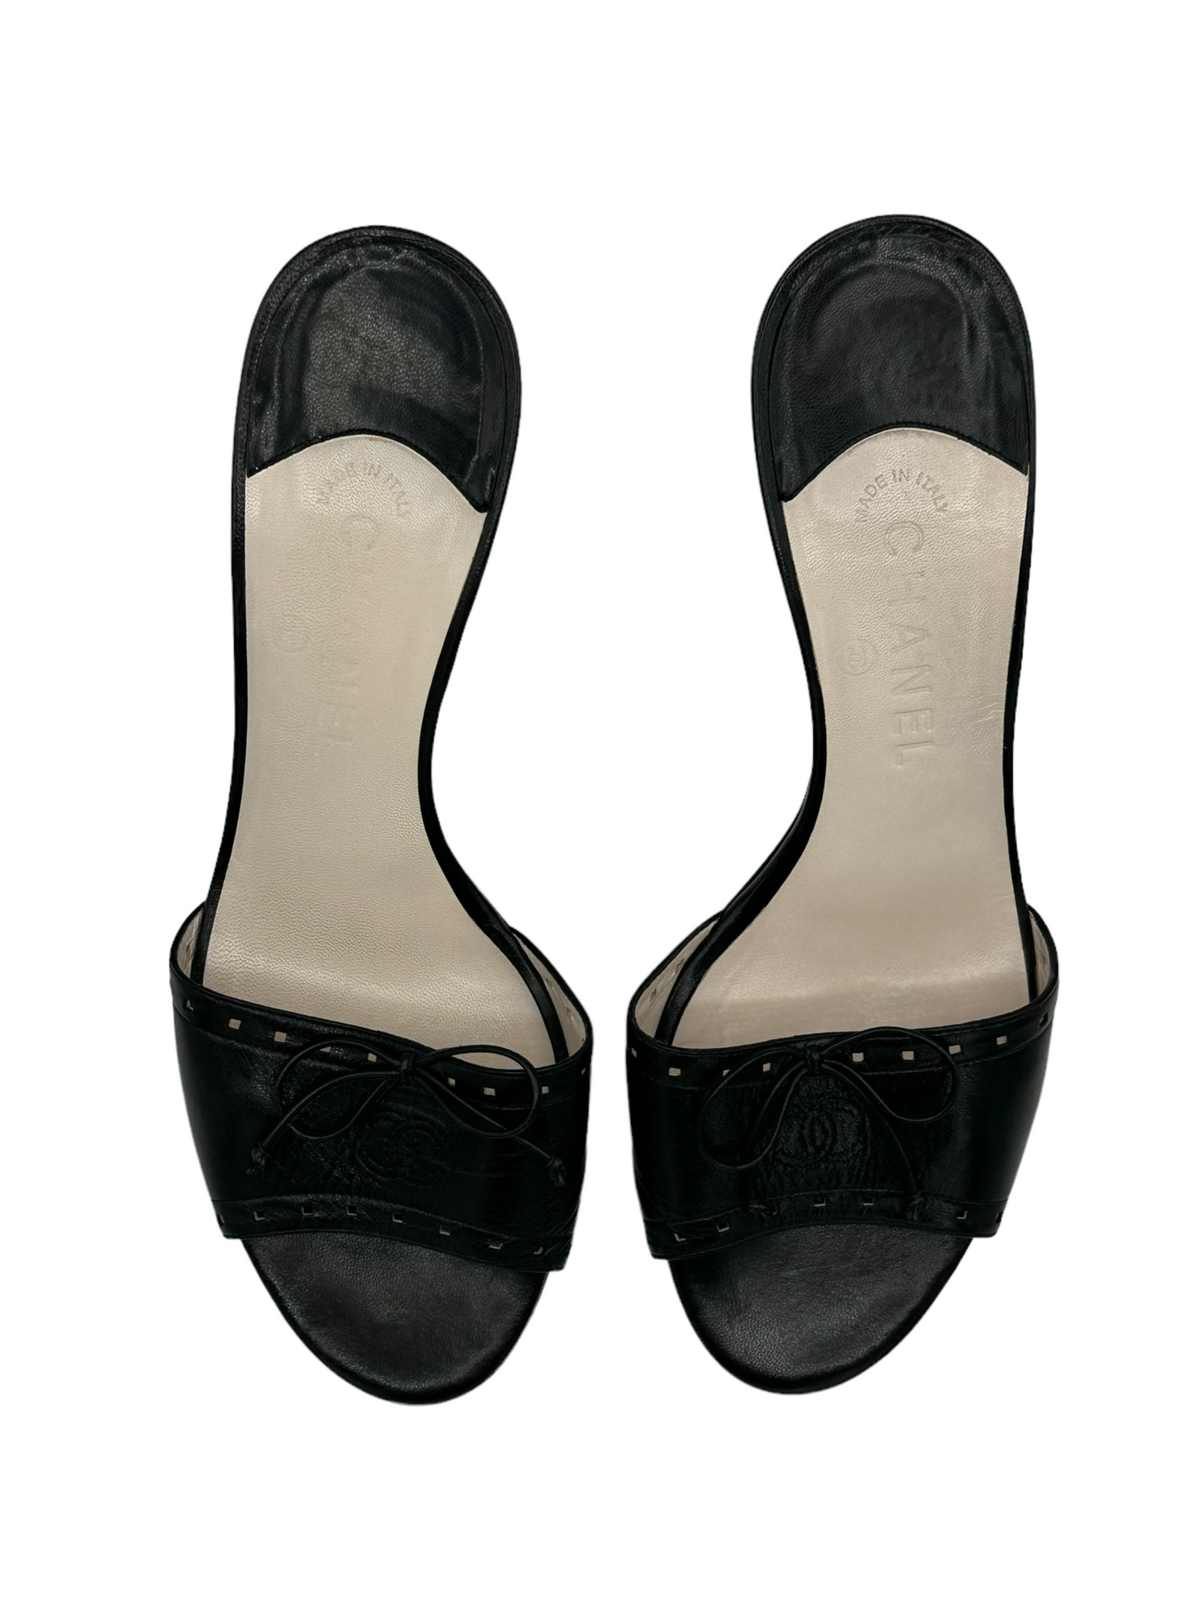 chanel black strap sandals womens